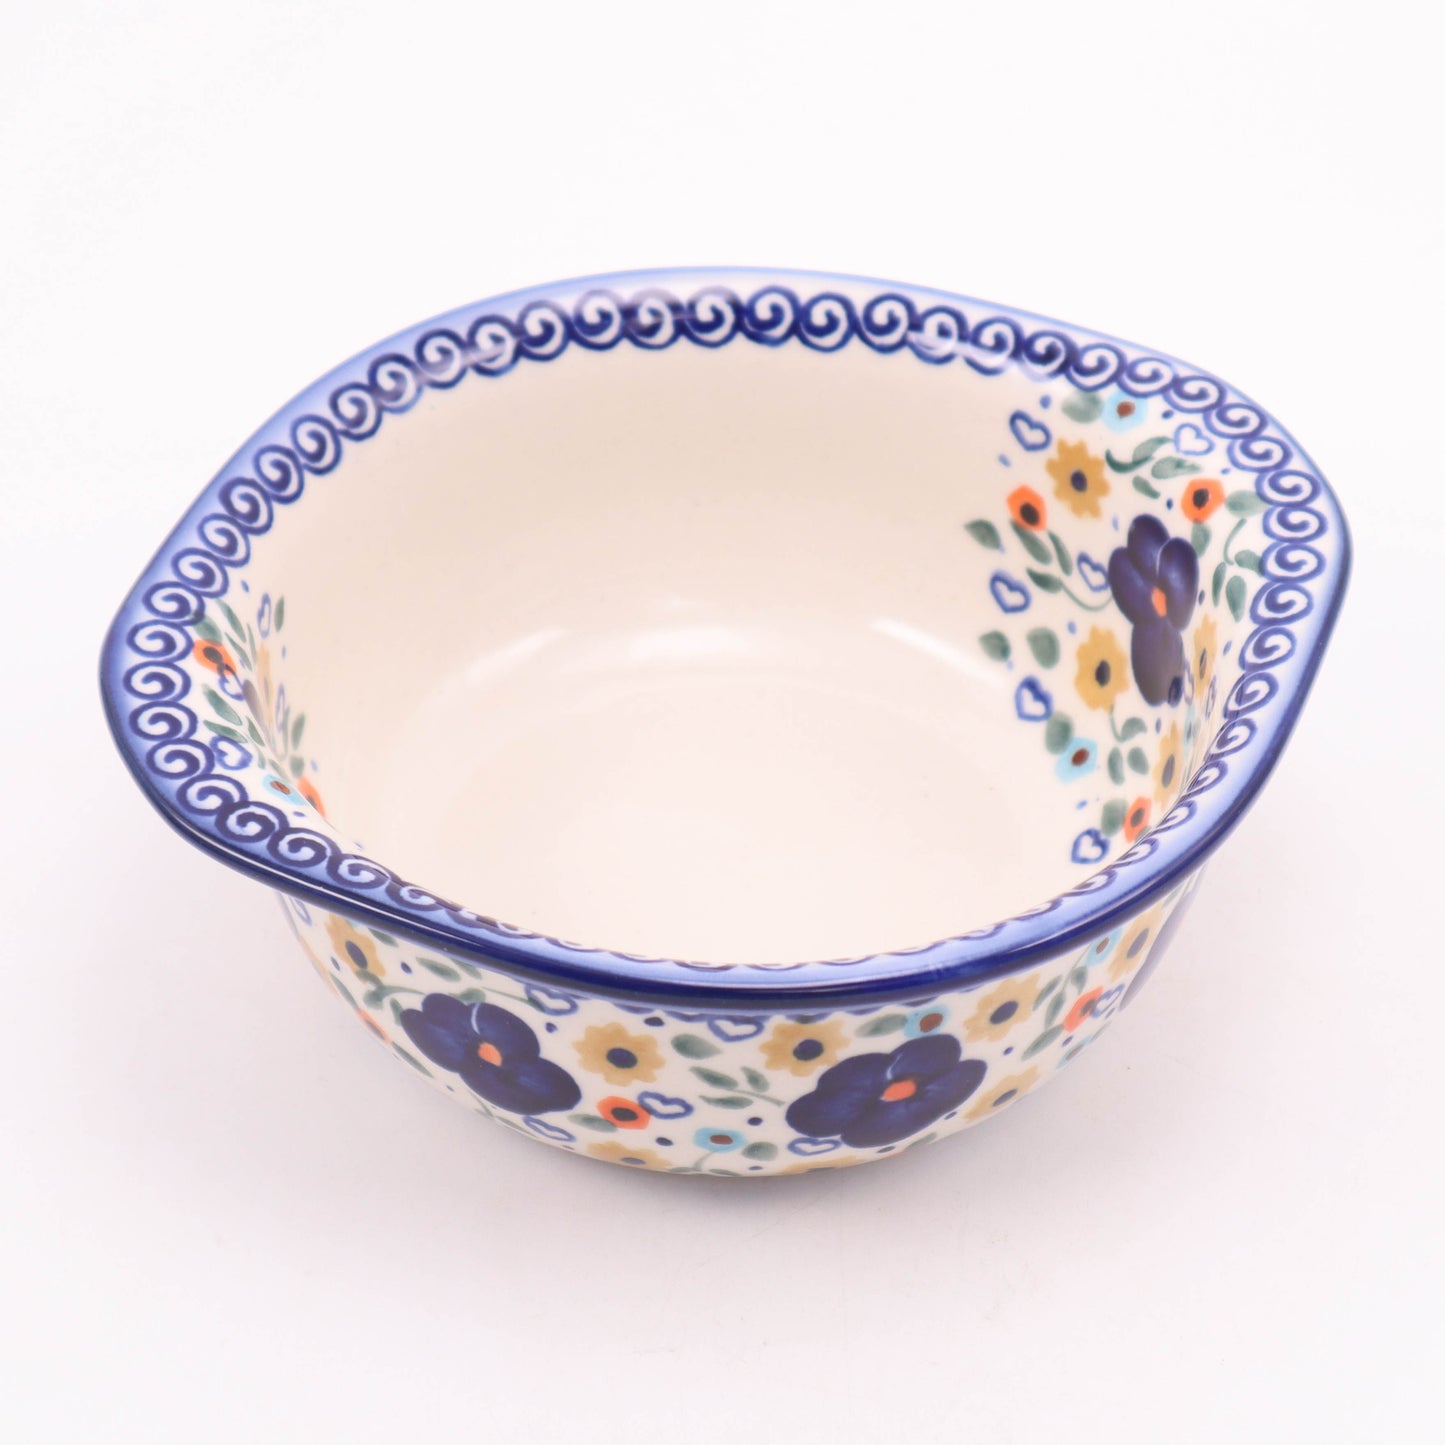 6.5" Soup Bowl with Handles. Pattern: Pick a Posy